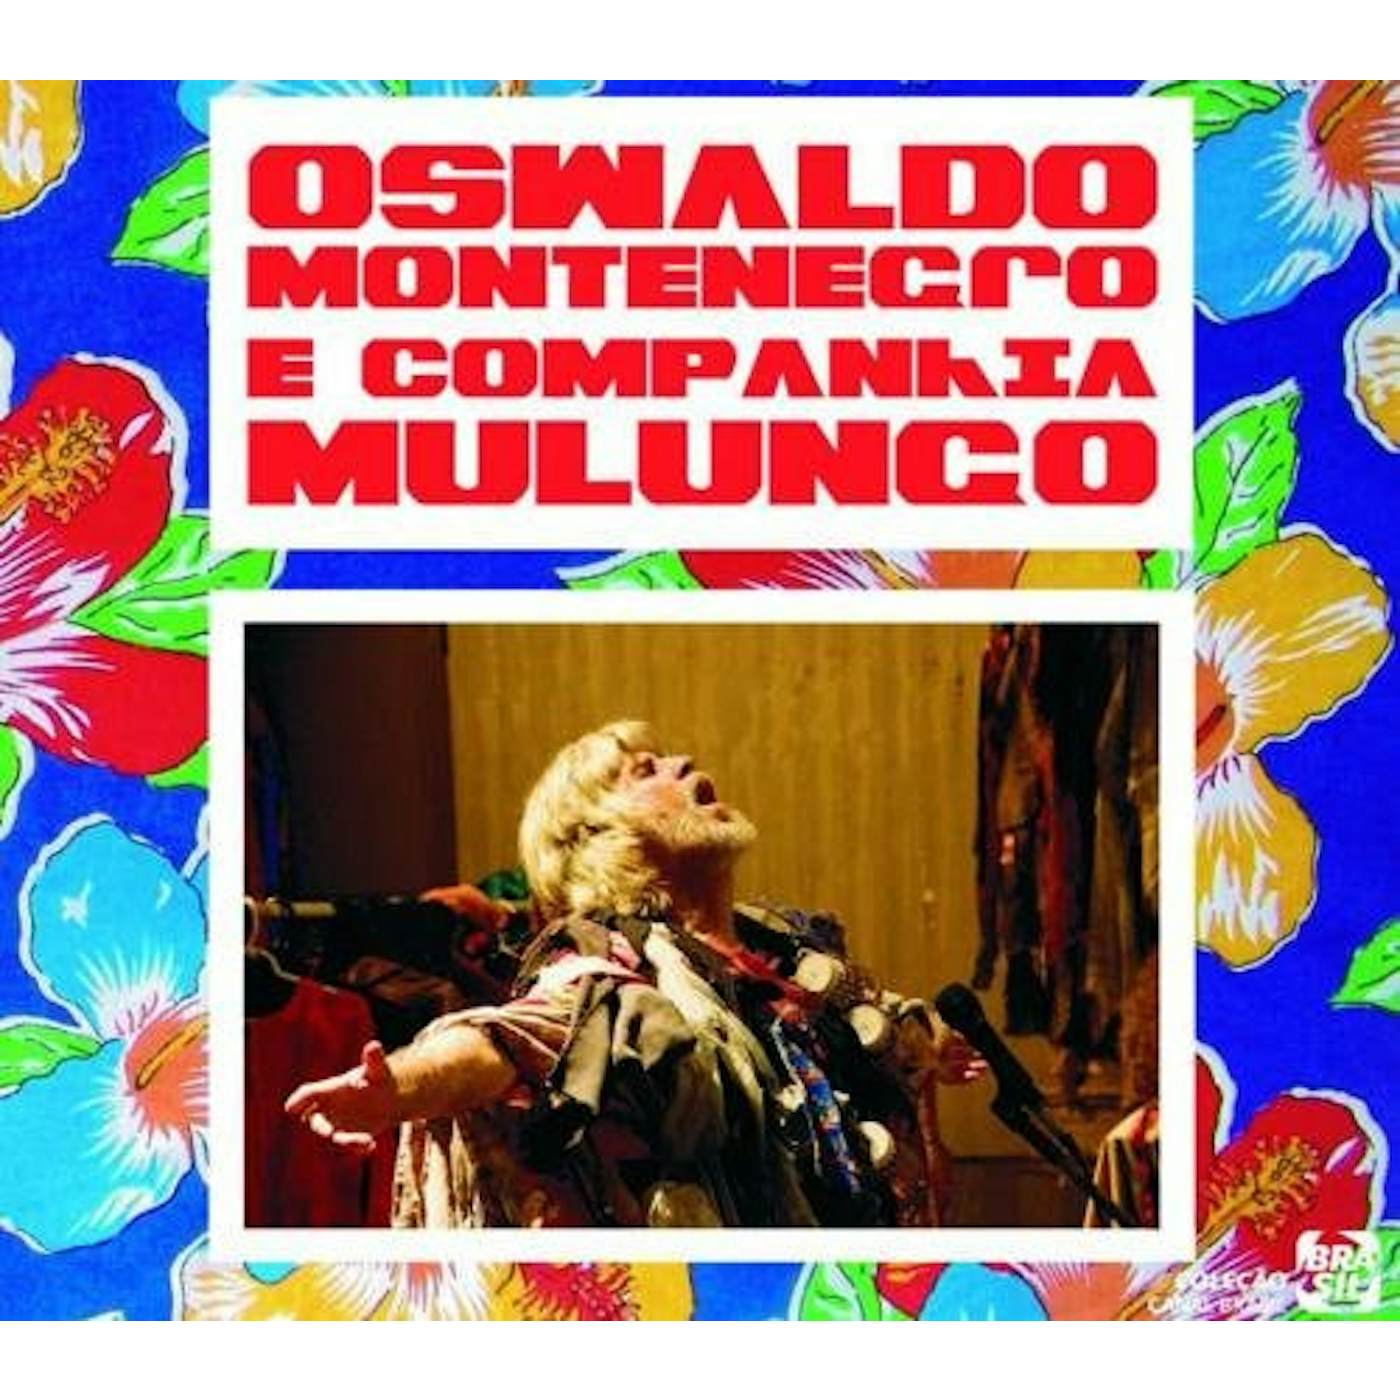 Oswaldo Montenegro COMPANHIA MULUNGO CD